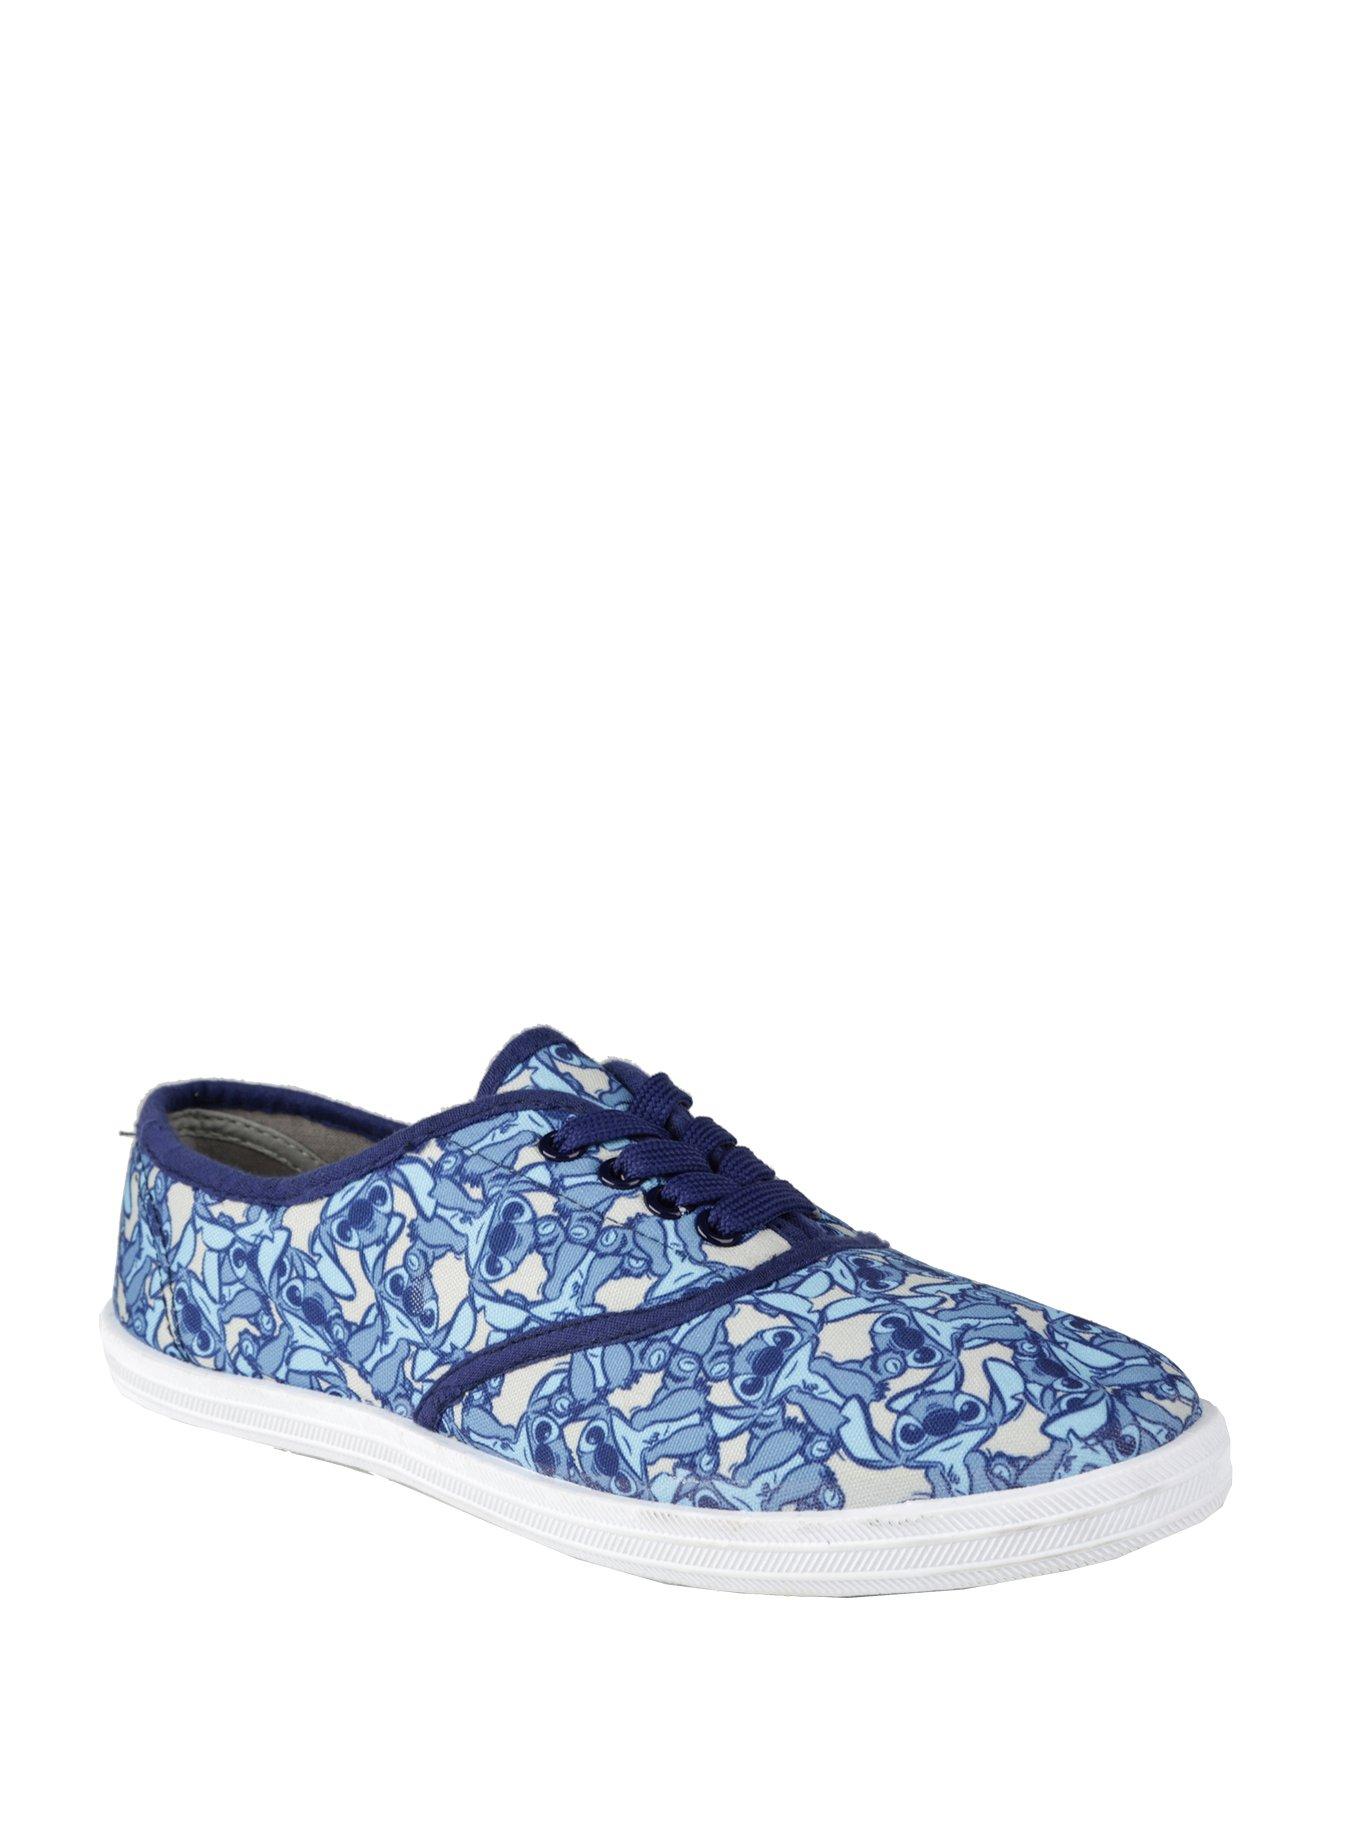 Disney Lilo & Stitch Lace-Up Sneakers, BLUE, hi-res